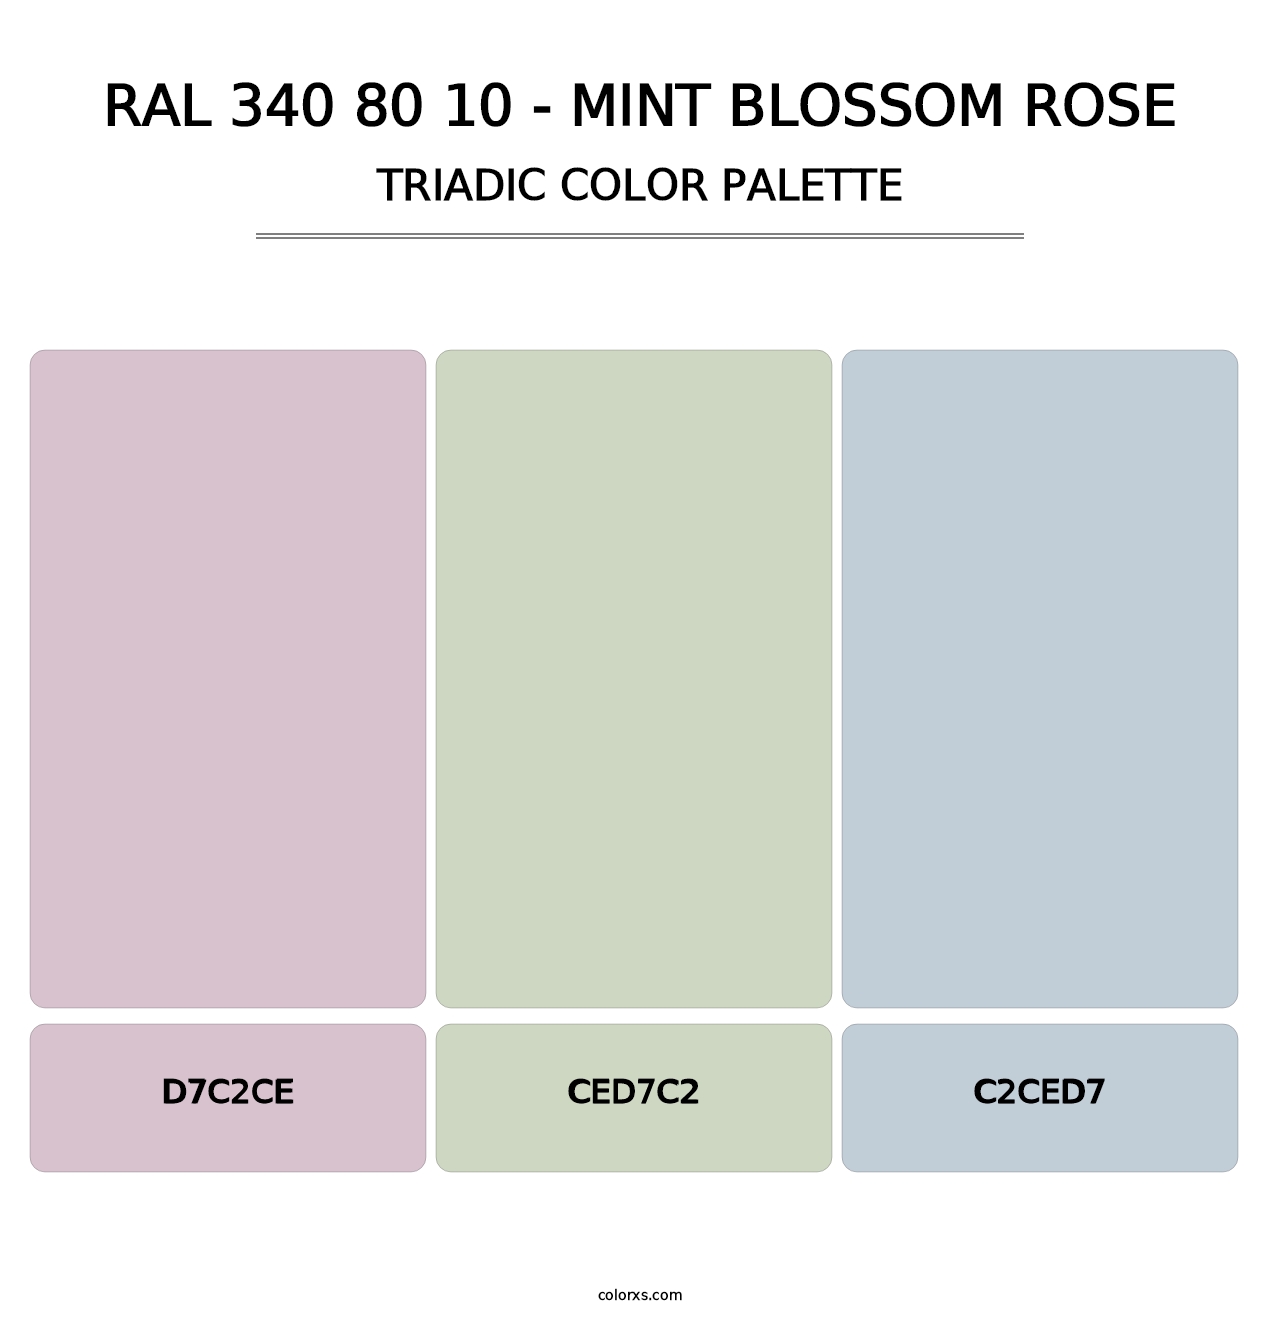 RAL 340 80 10 - Mint Blossom Rose - Triadic Color Palette